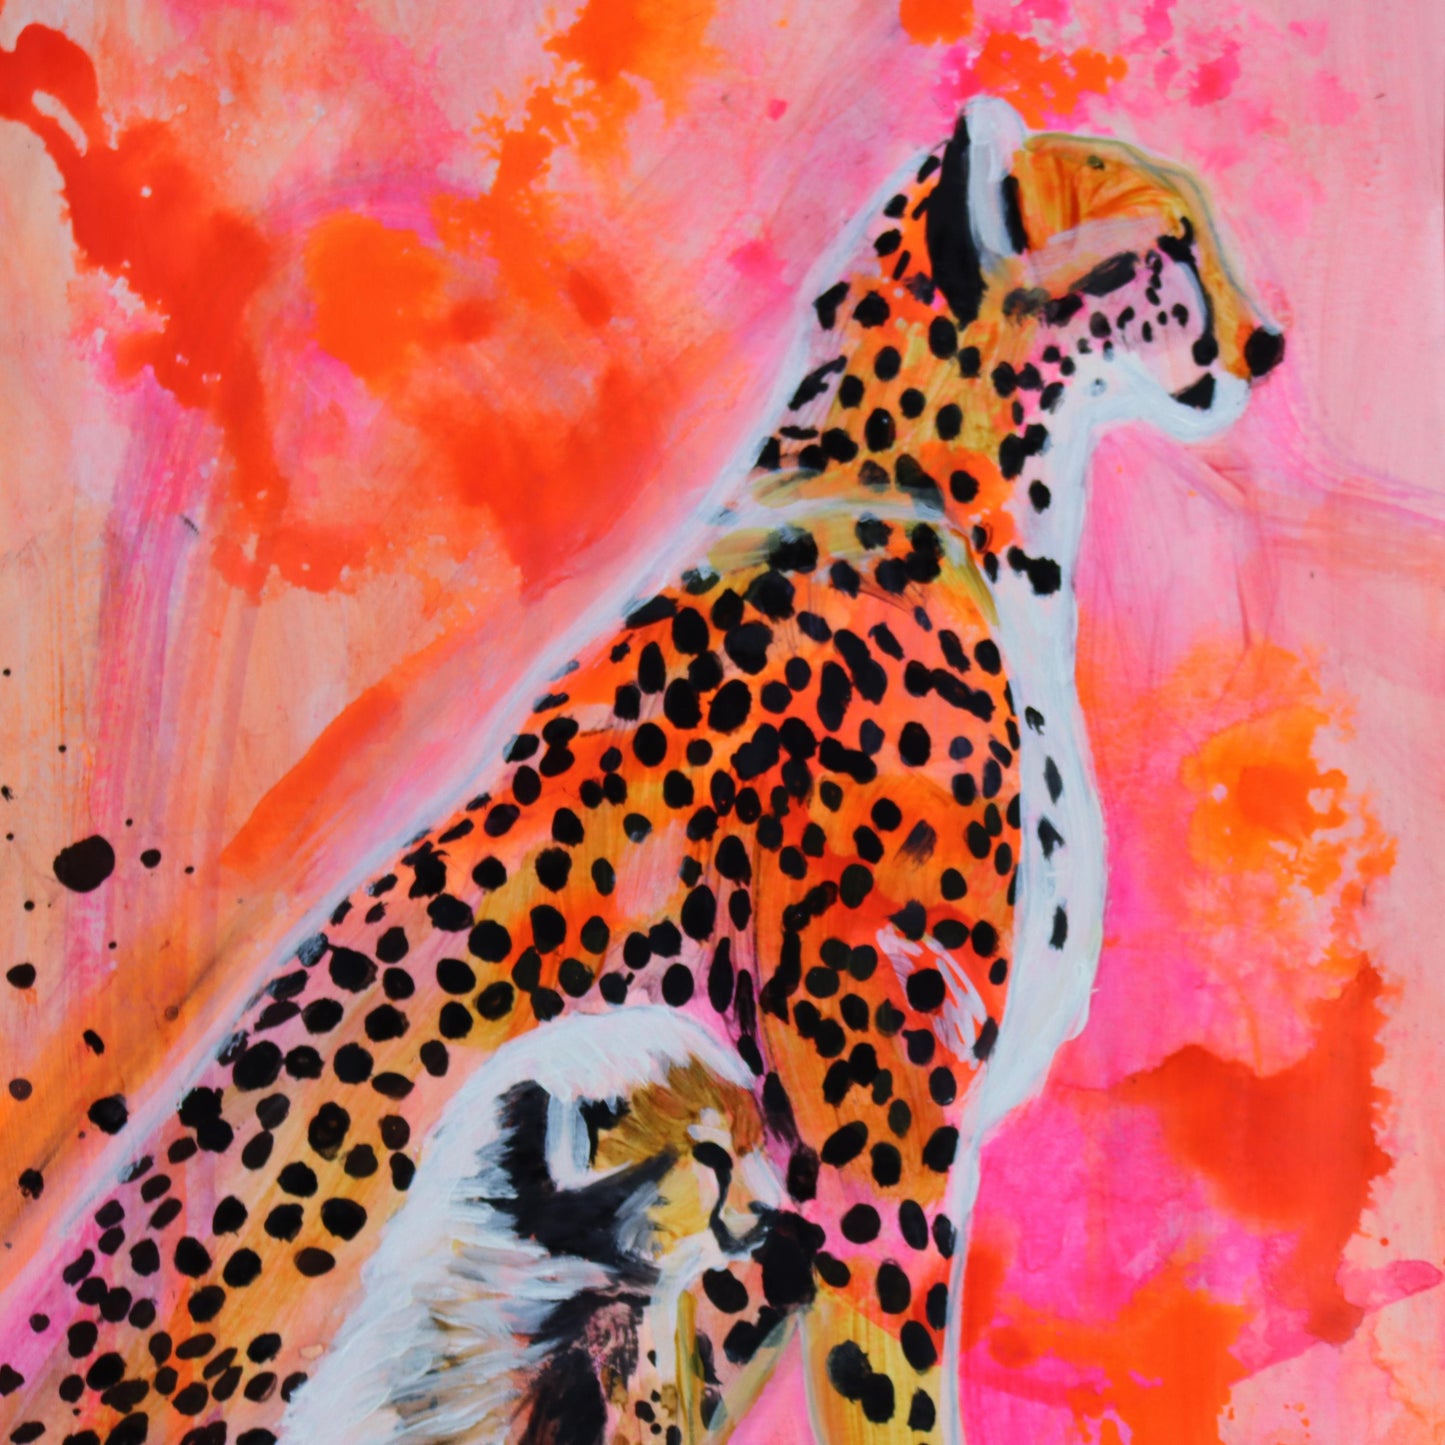 Cheetah - Oil on paper - 9x12